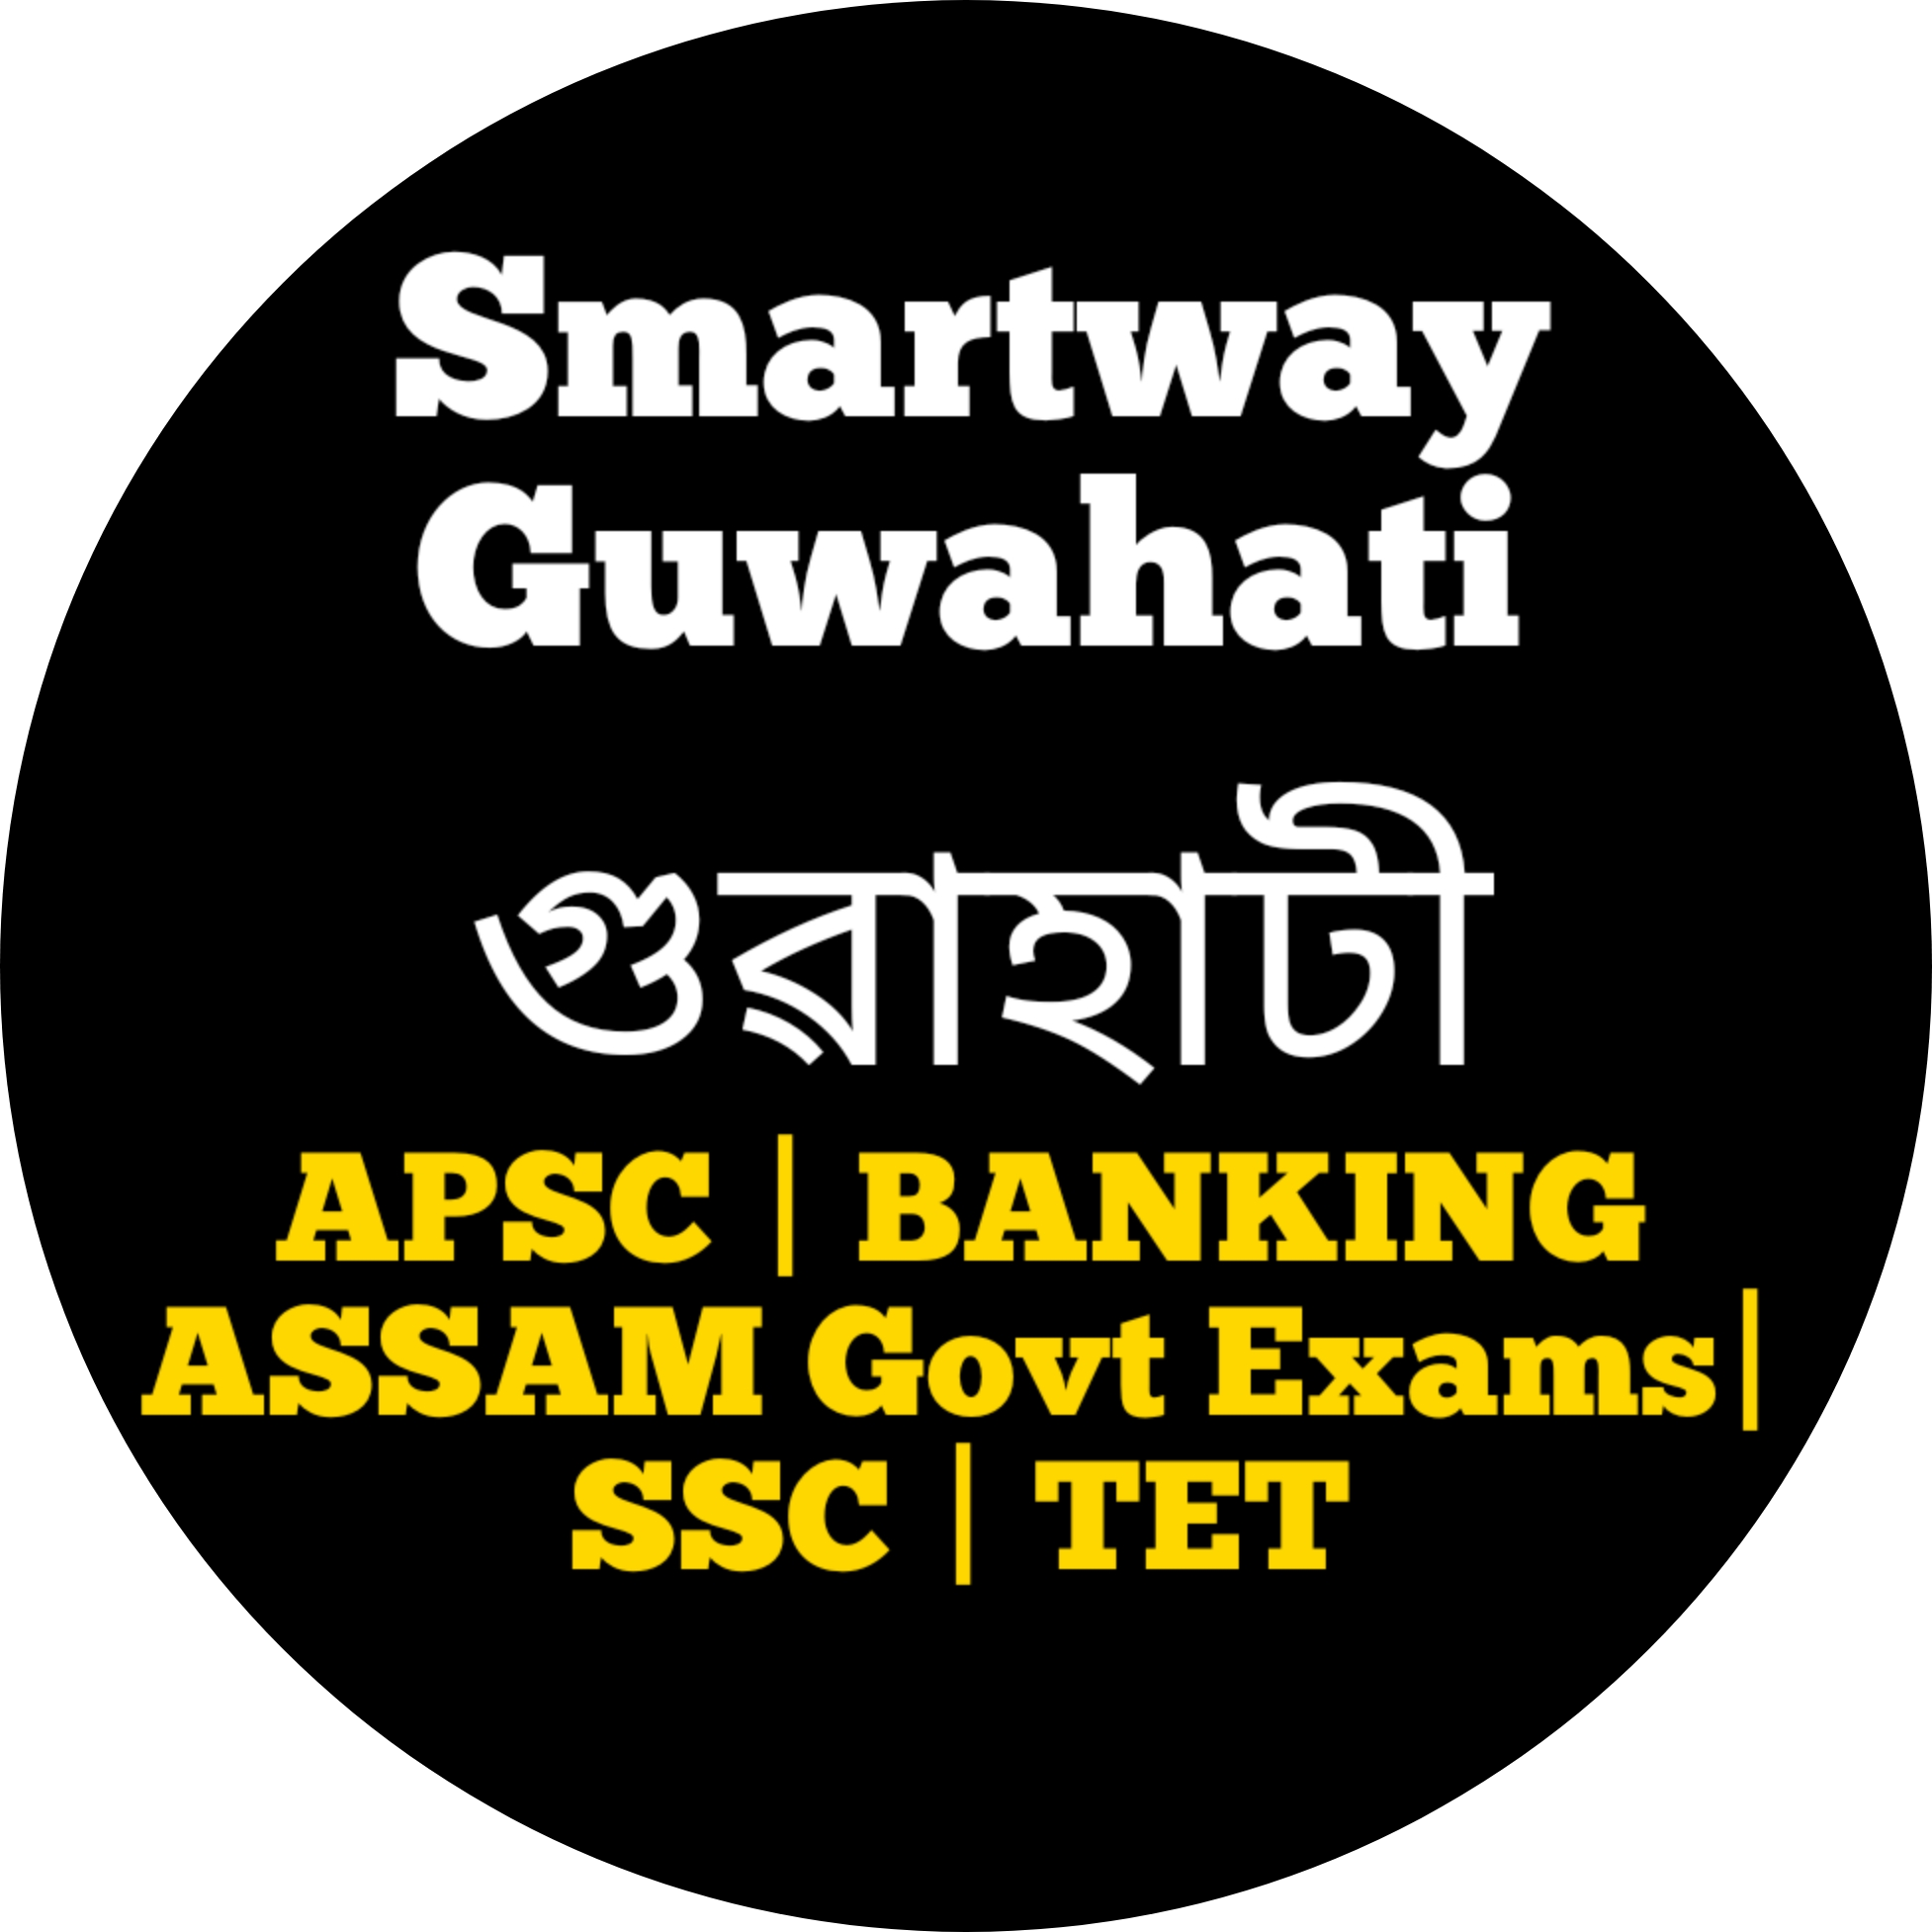 SMARTWAY Guwahati - Logo